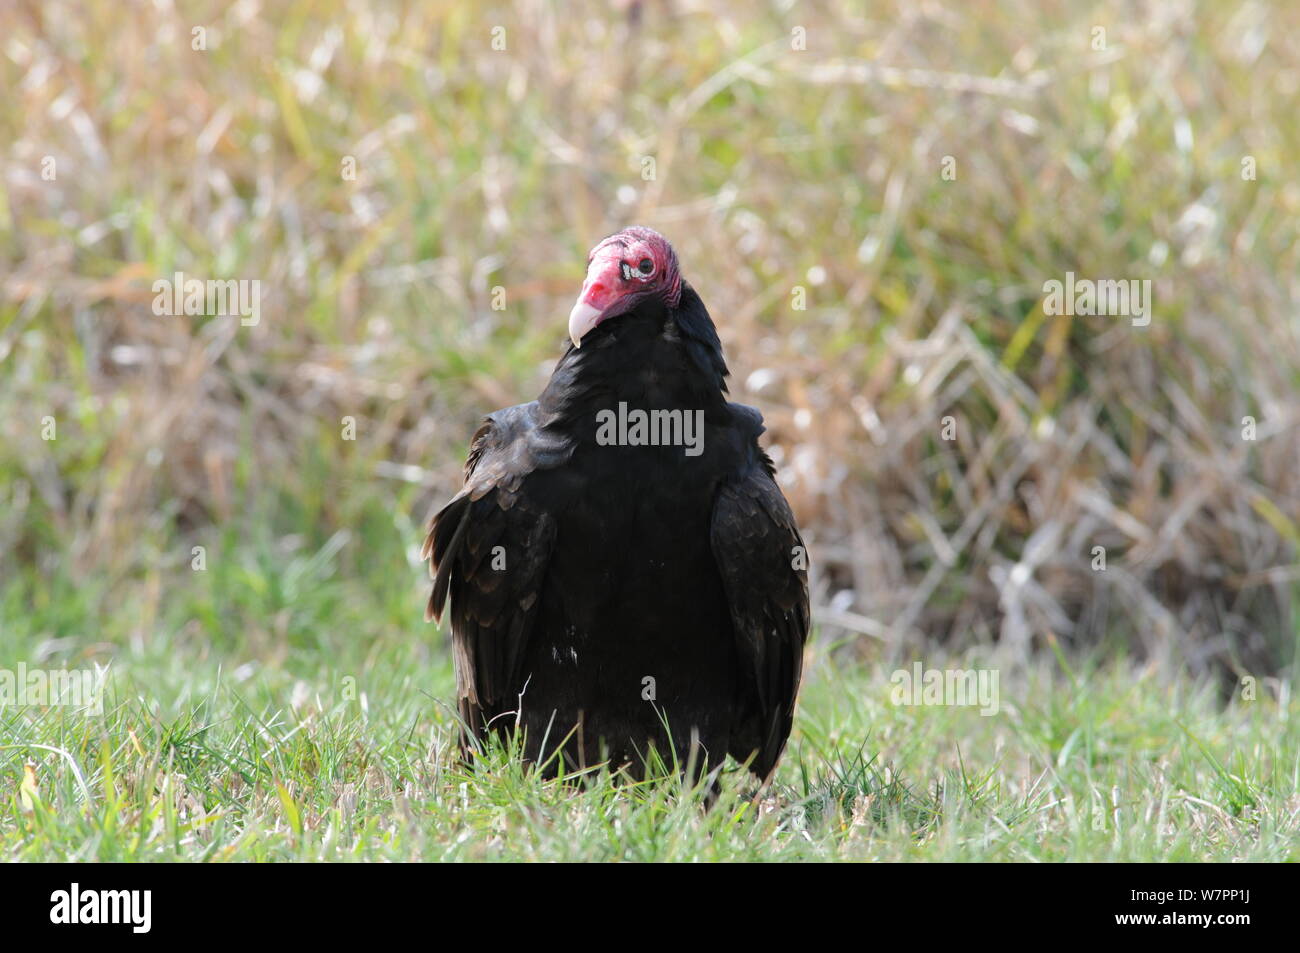 Turkey vulture sitting on the ground Stock Photo